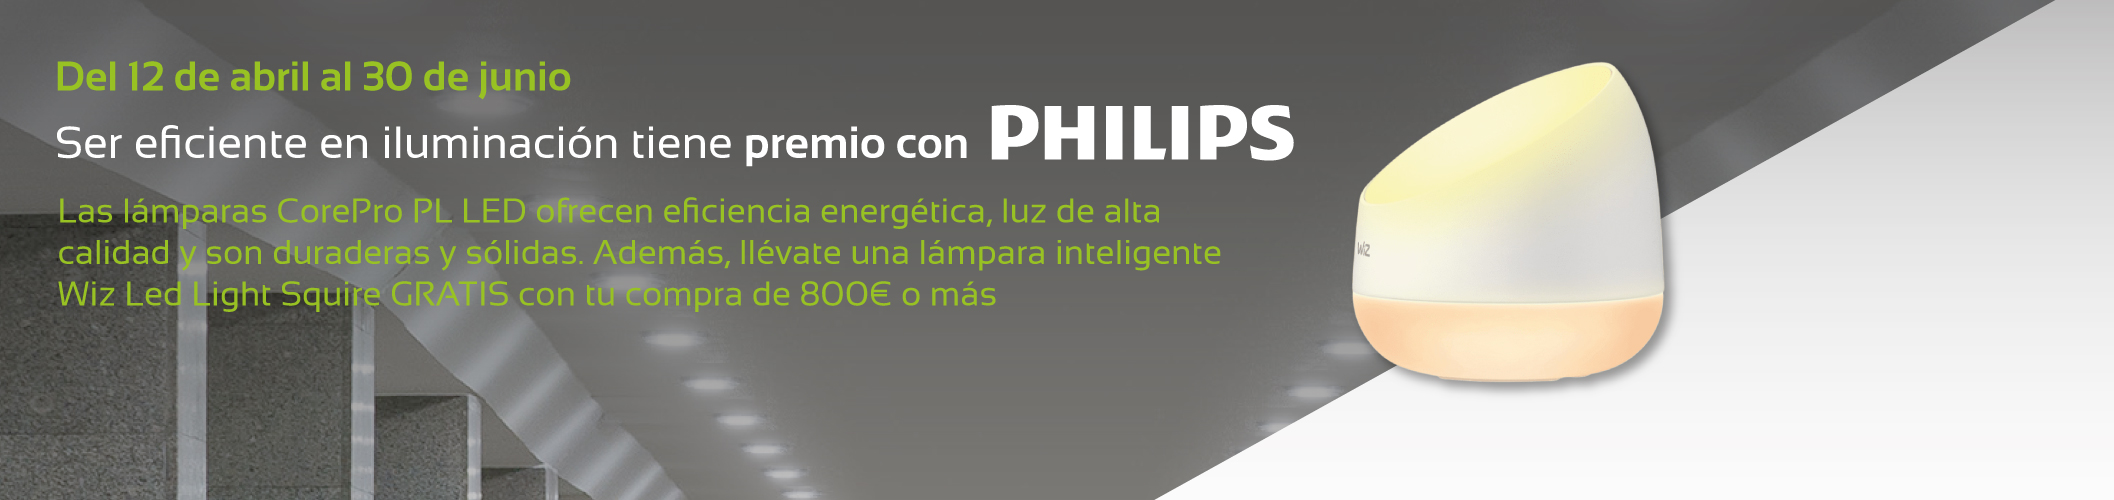 promo-philips-sinelec-banner-web (1).jpg